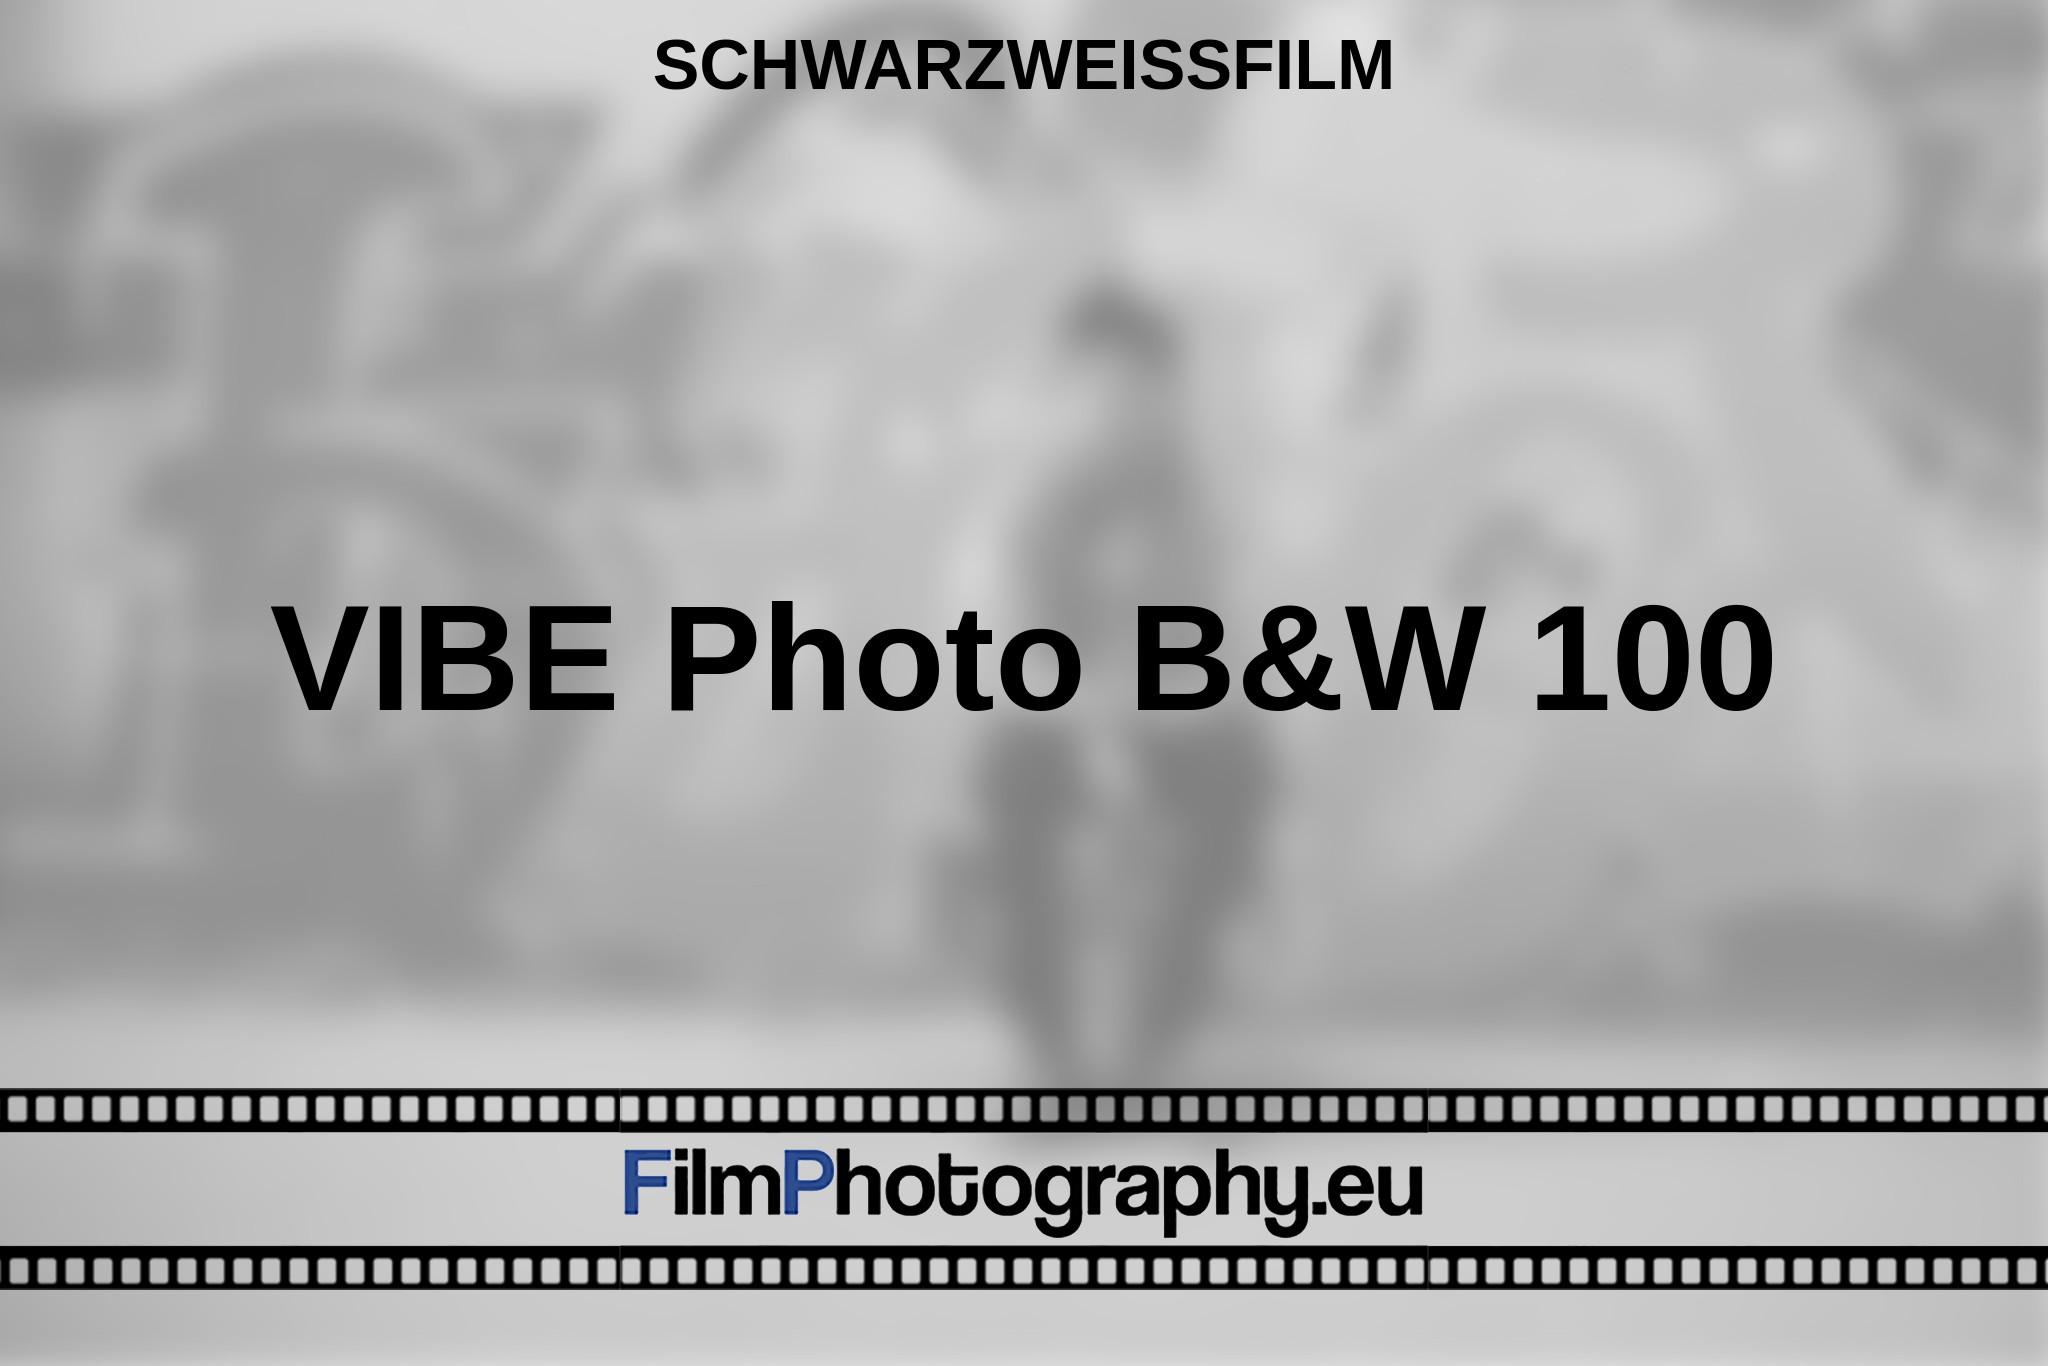 vibe-photo-b-w-100-schwarzweißfilm-bnv.jpg